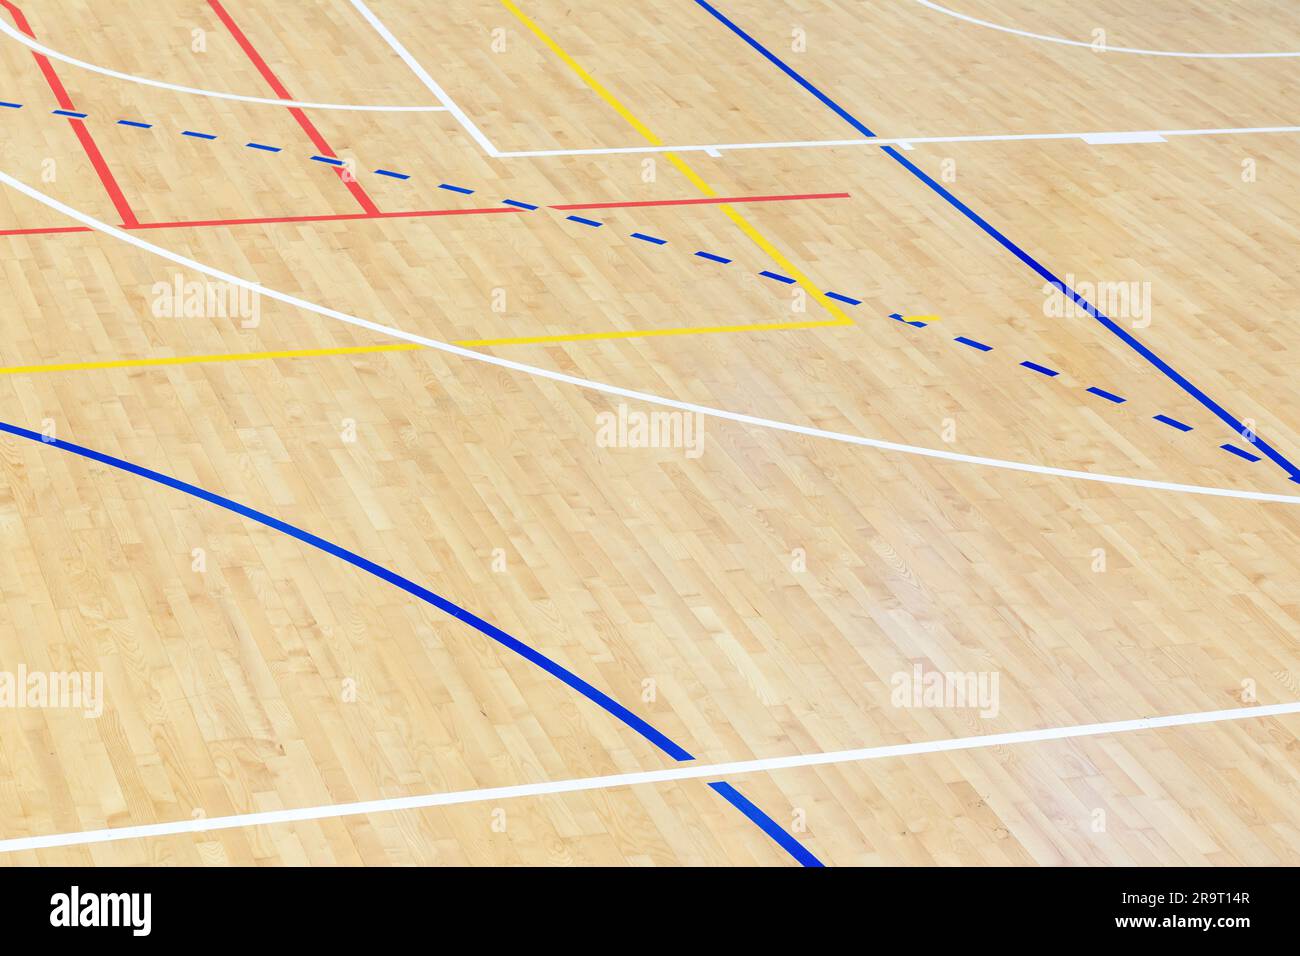 Wooden floor basketball, badminton, futsal, handball, volleyball, football, soccer court. Wooden floor of sports hall with marking lines on wooden flo Stock Photo